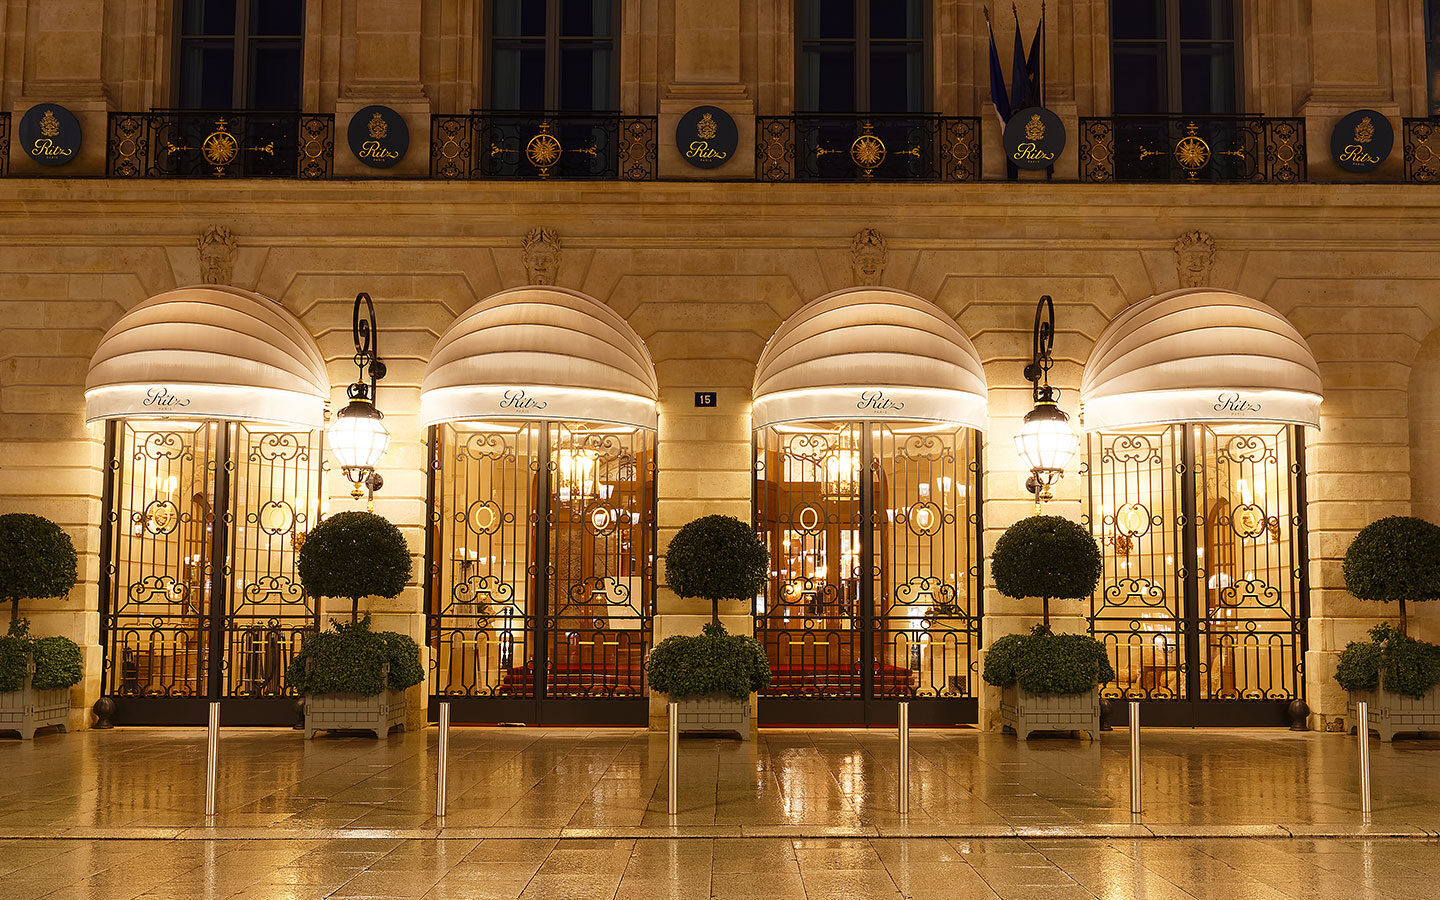 The entrance to the Ritz Hotel in Paris' Place Vendôme